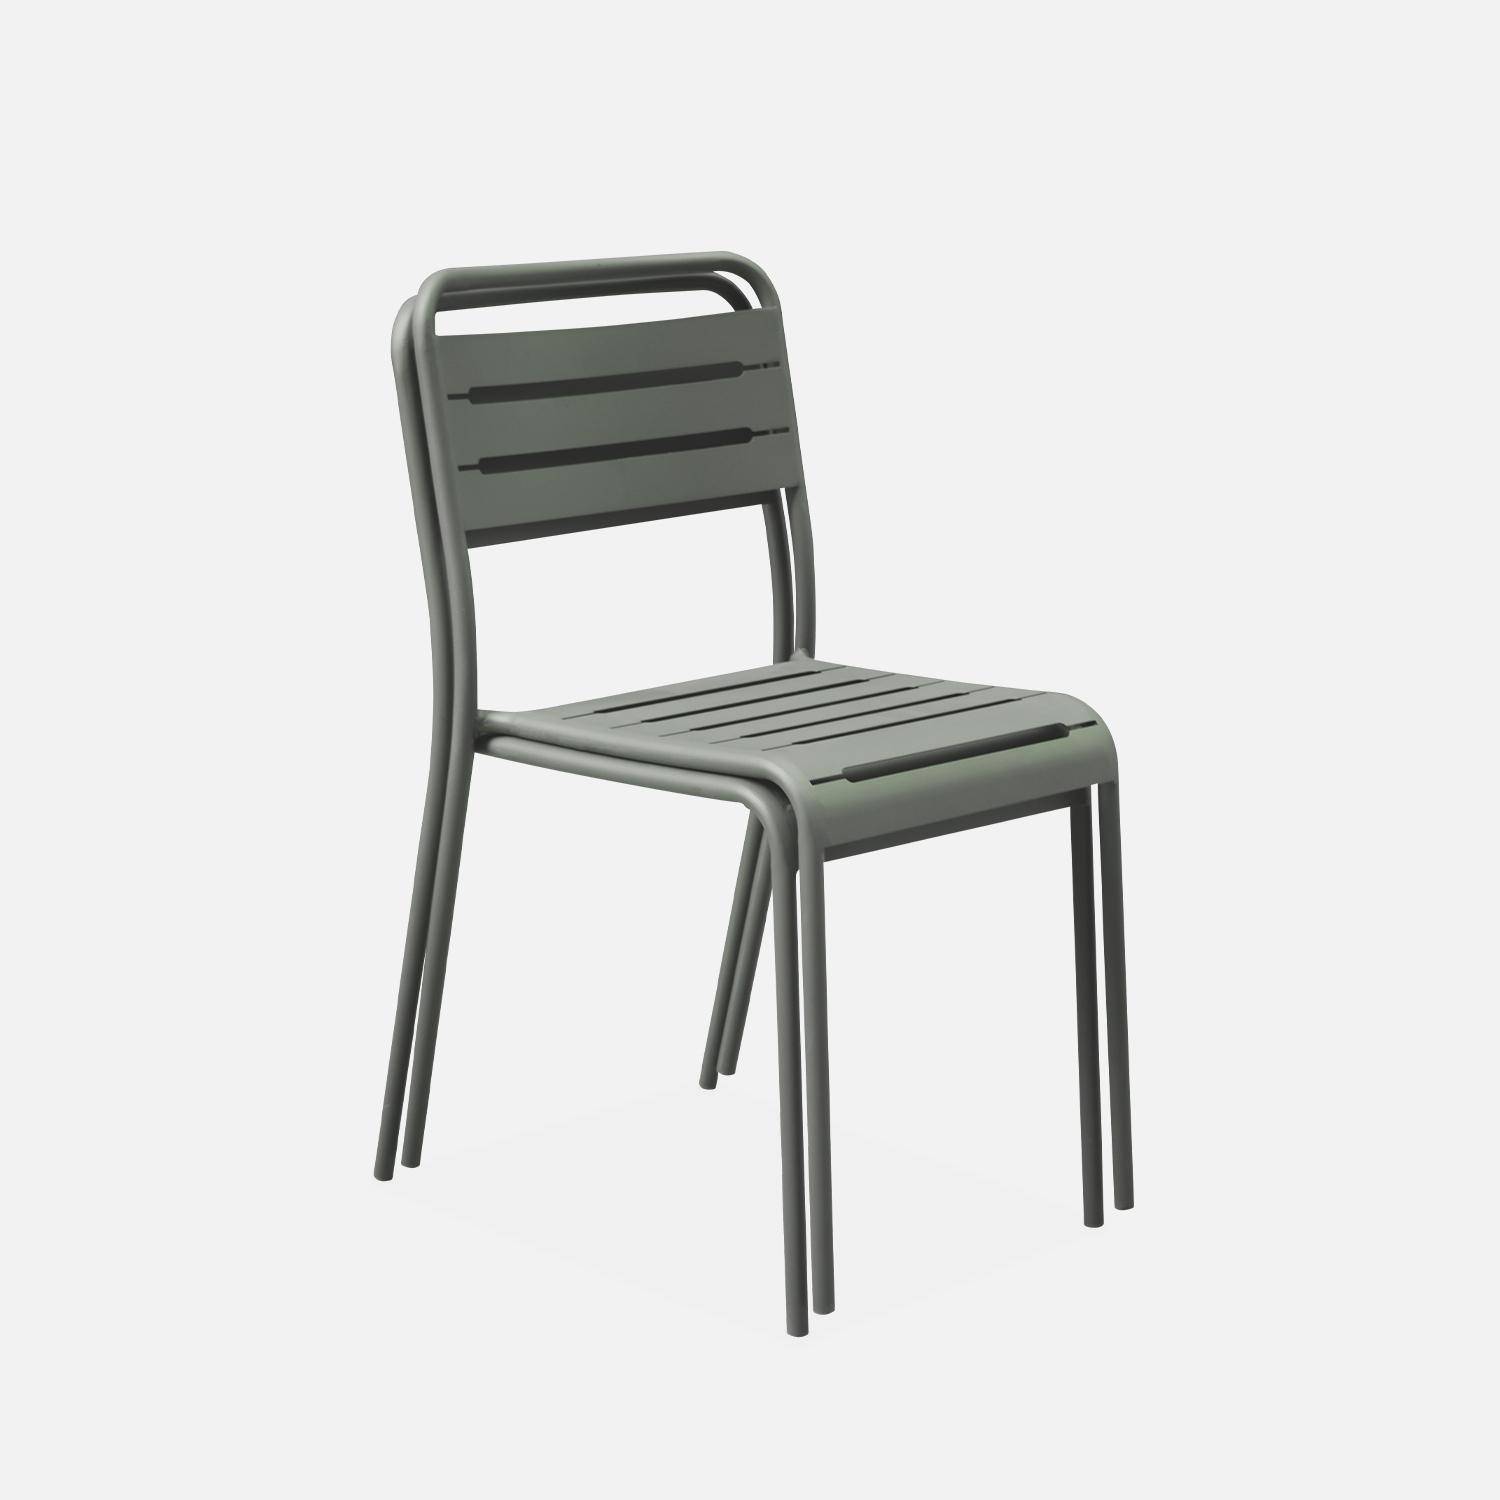 Pair of bistro steel garden chairs, stackable, W44xD52xH79cm, Khaki Green,sweeek,Photo5